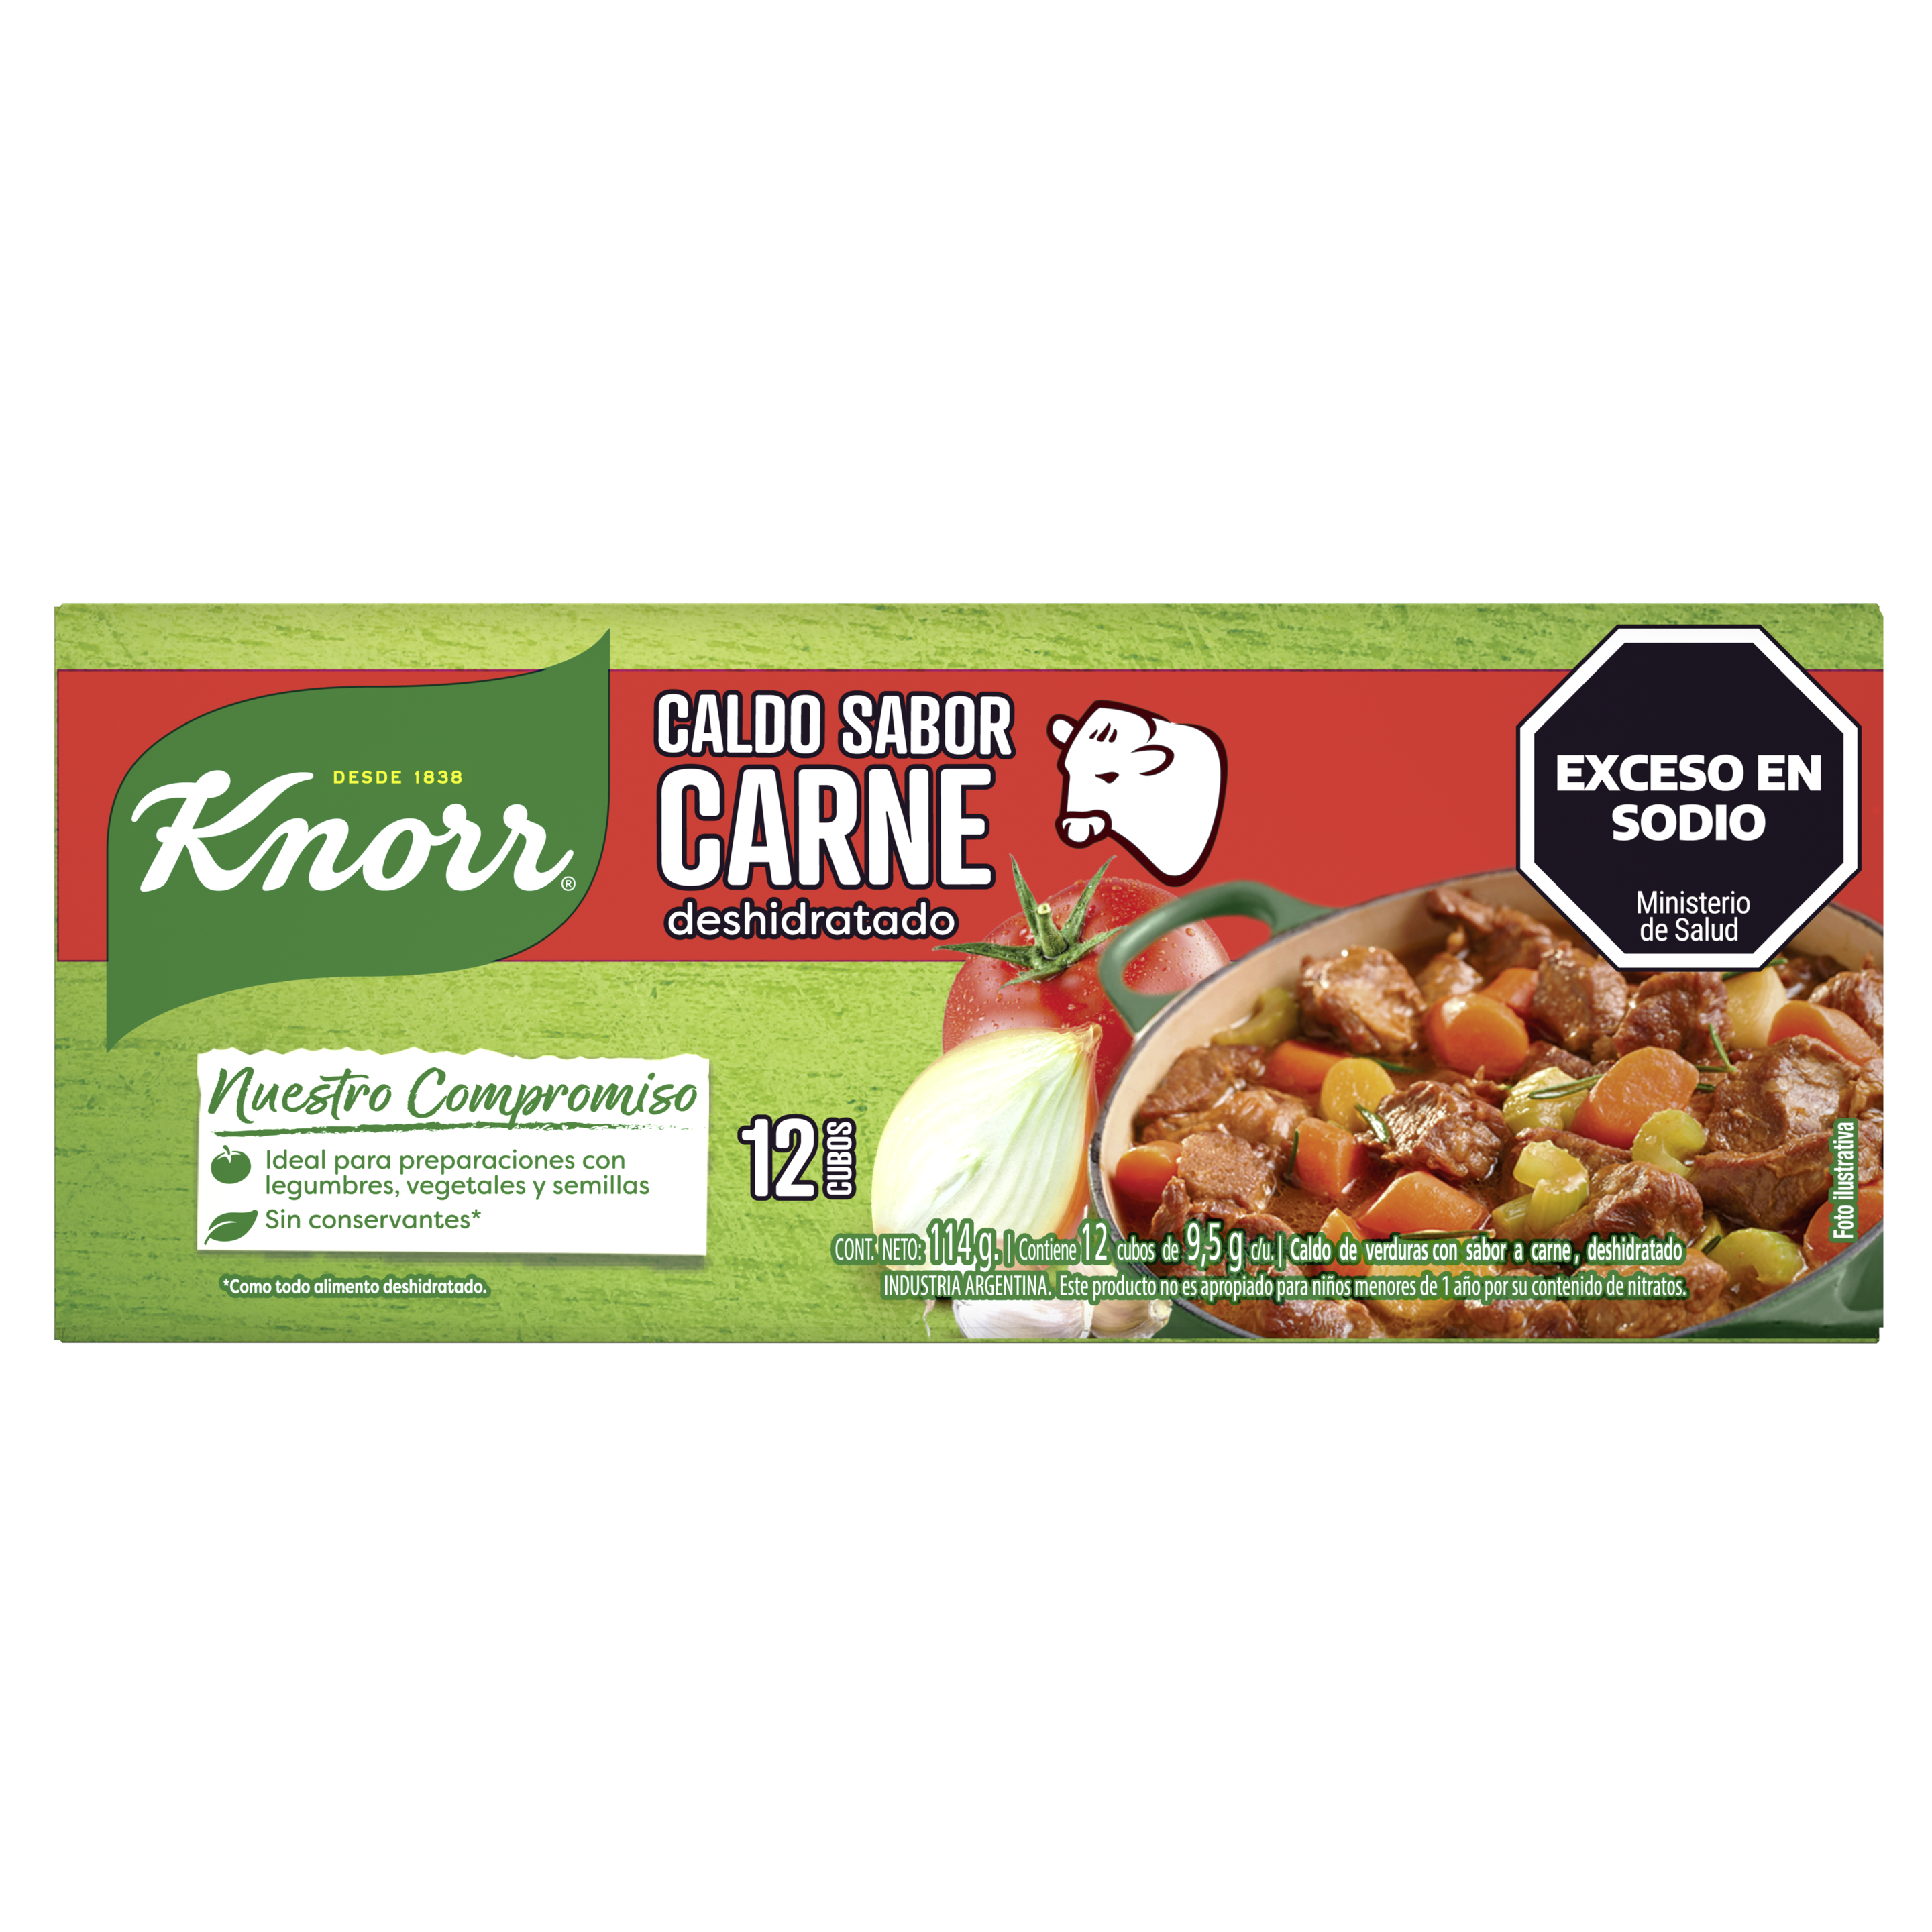 Imagen de envase Caldo de Carne x12 Knorr